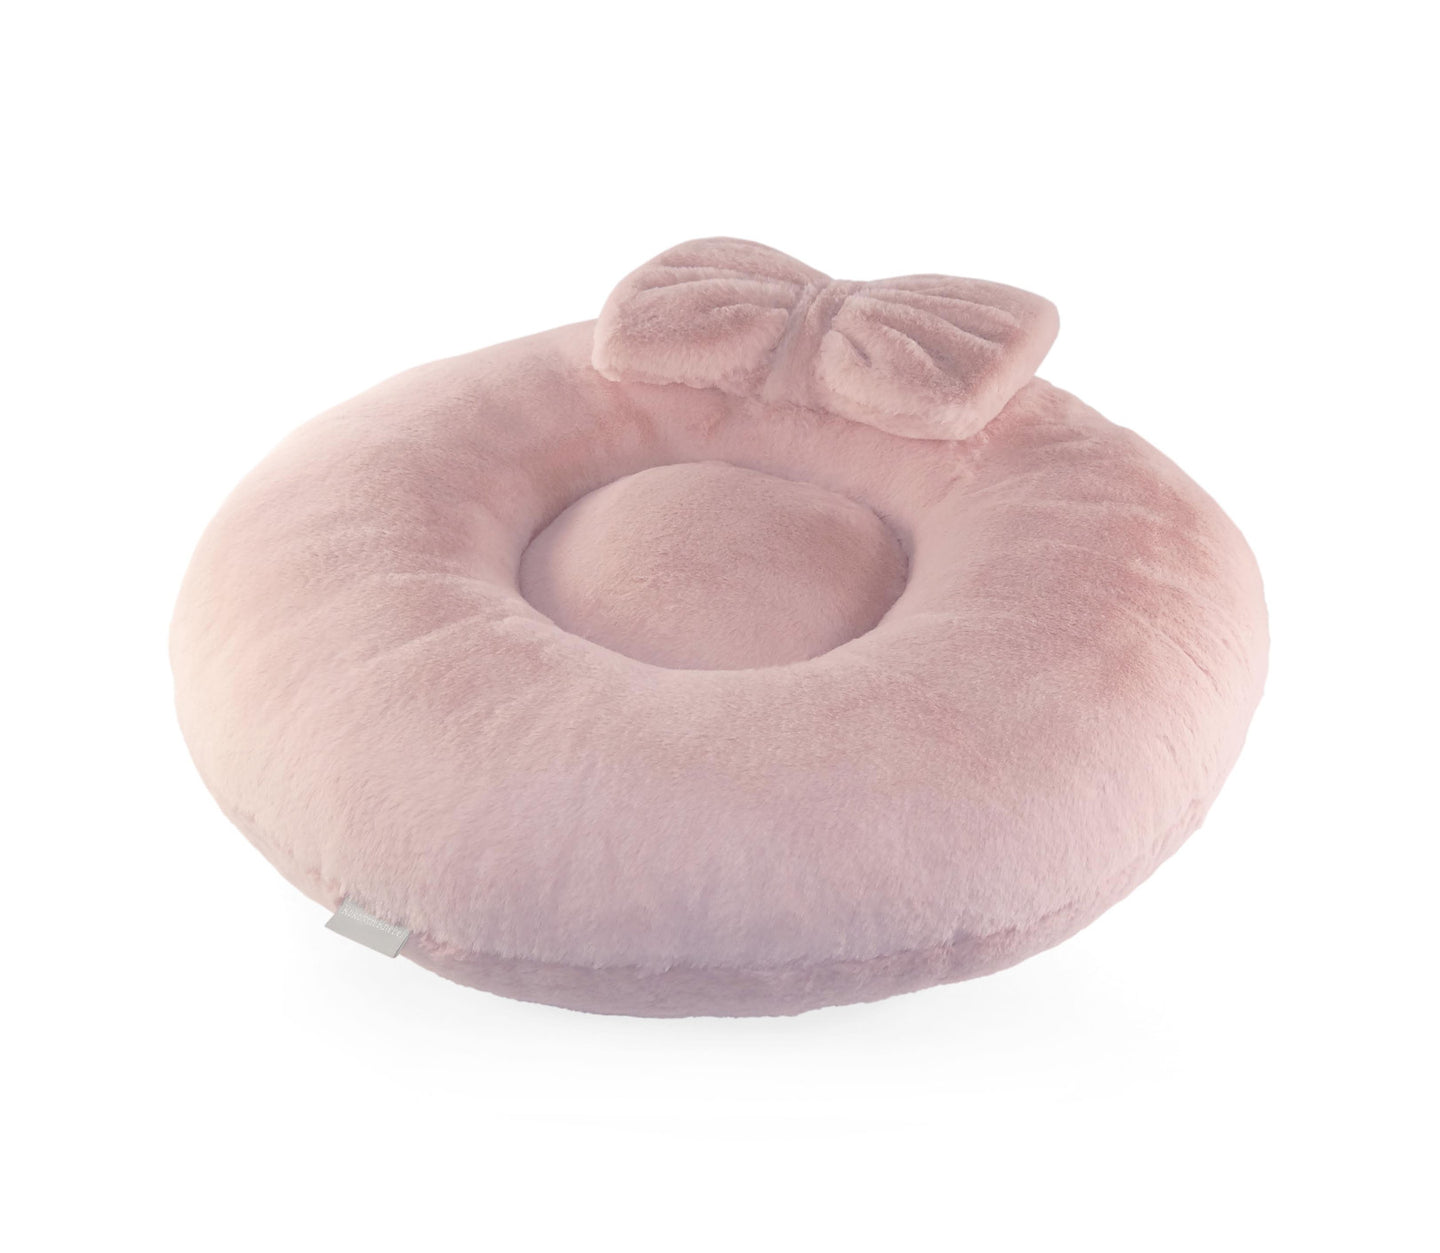 Donut Cushion Pink - Hundekissen